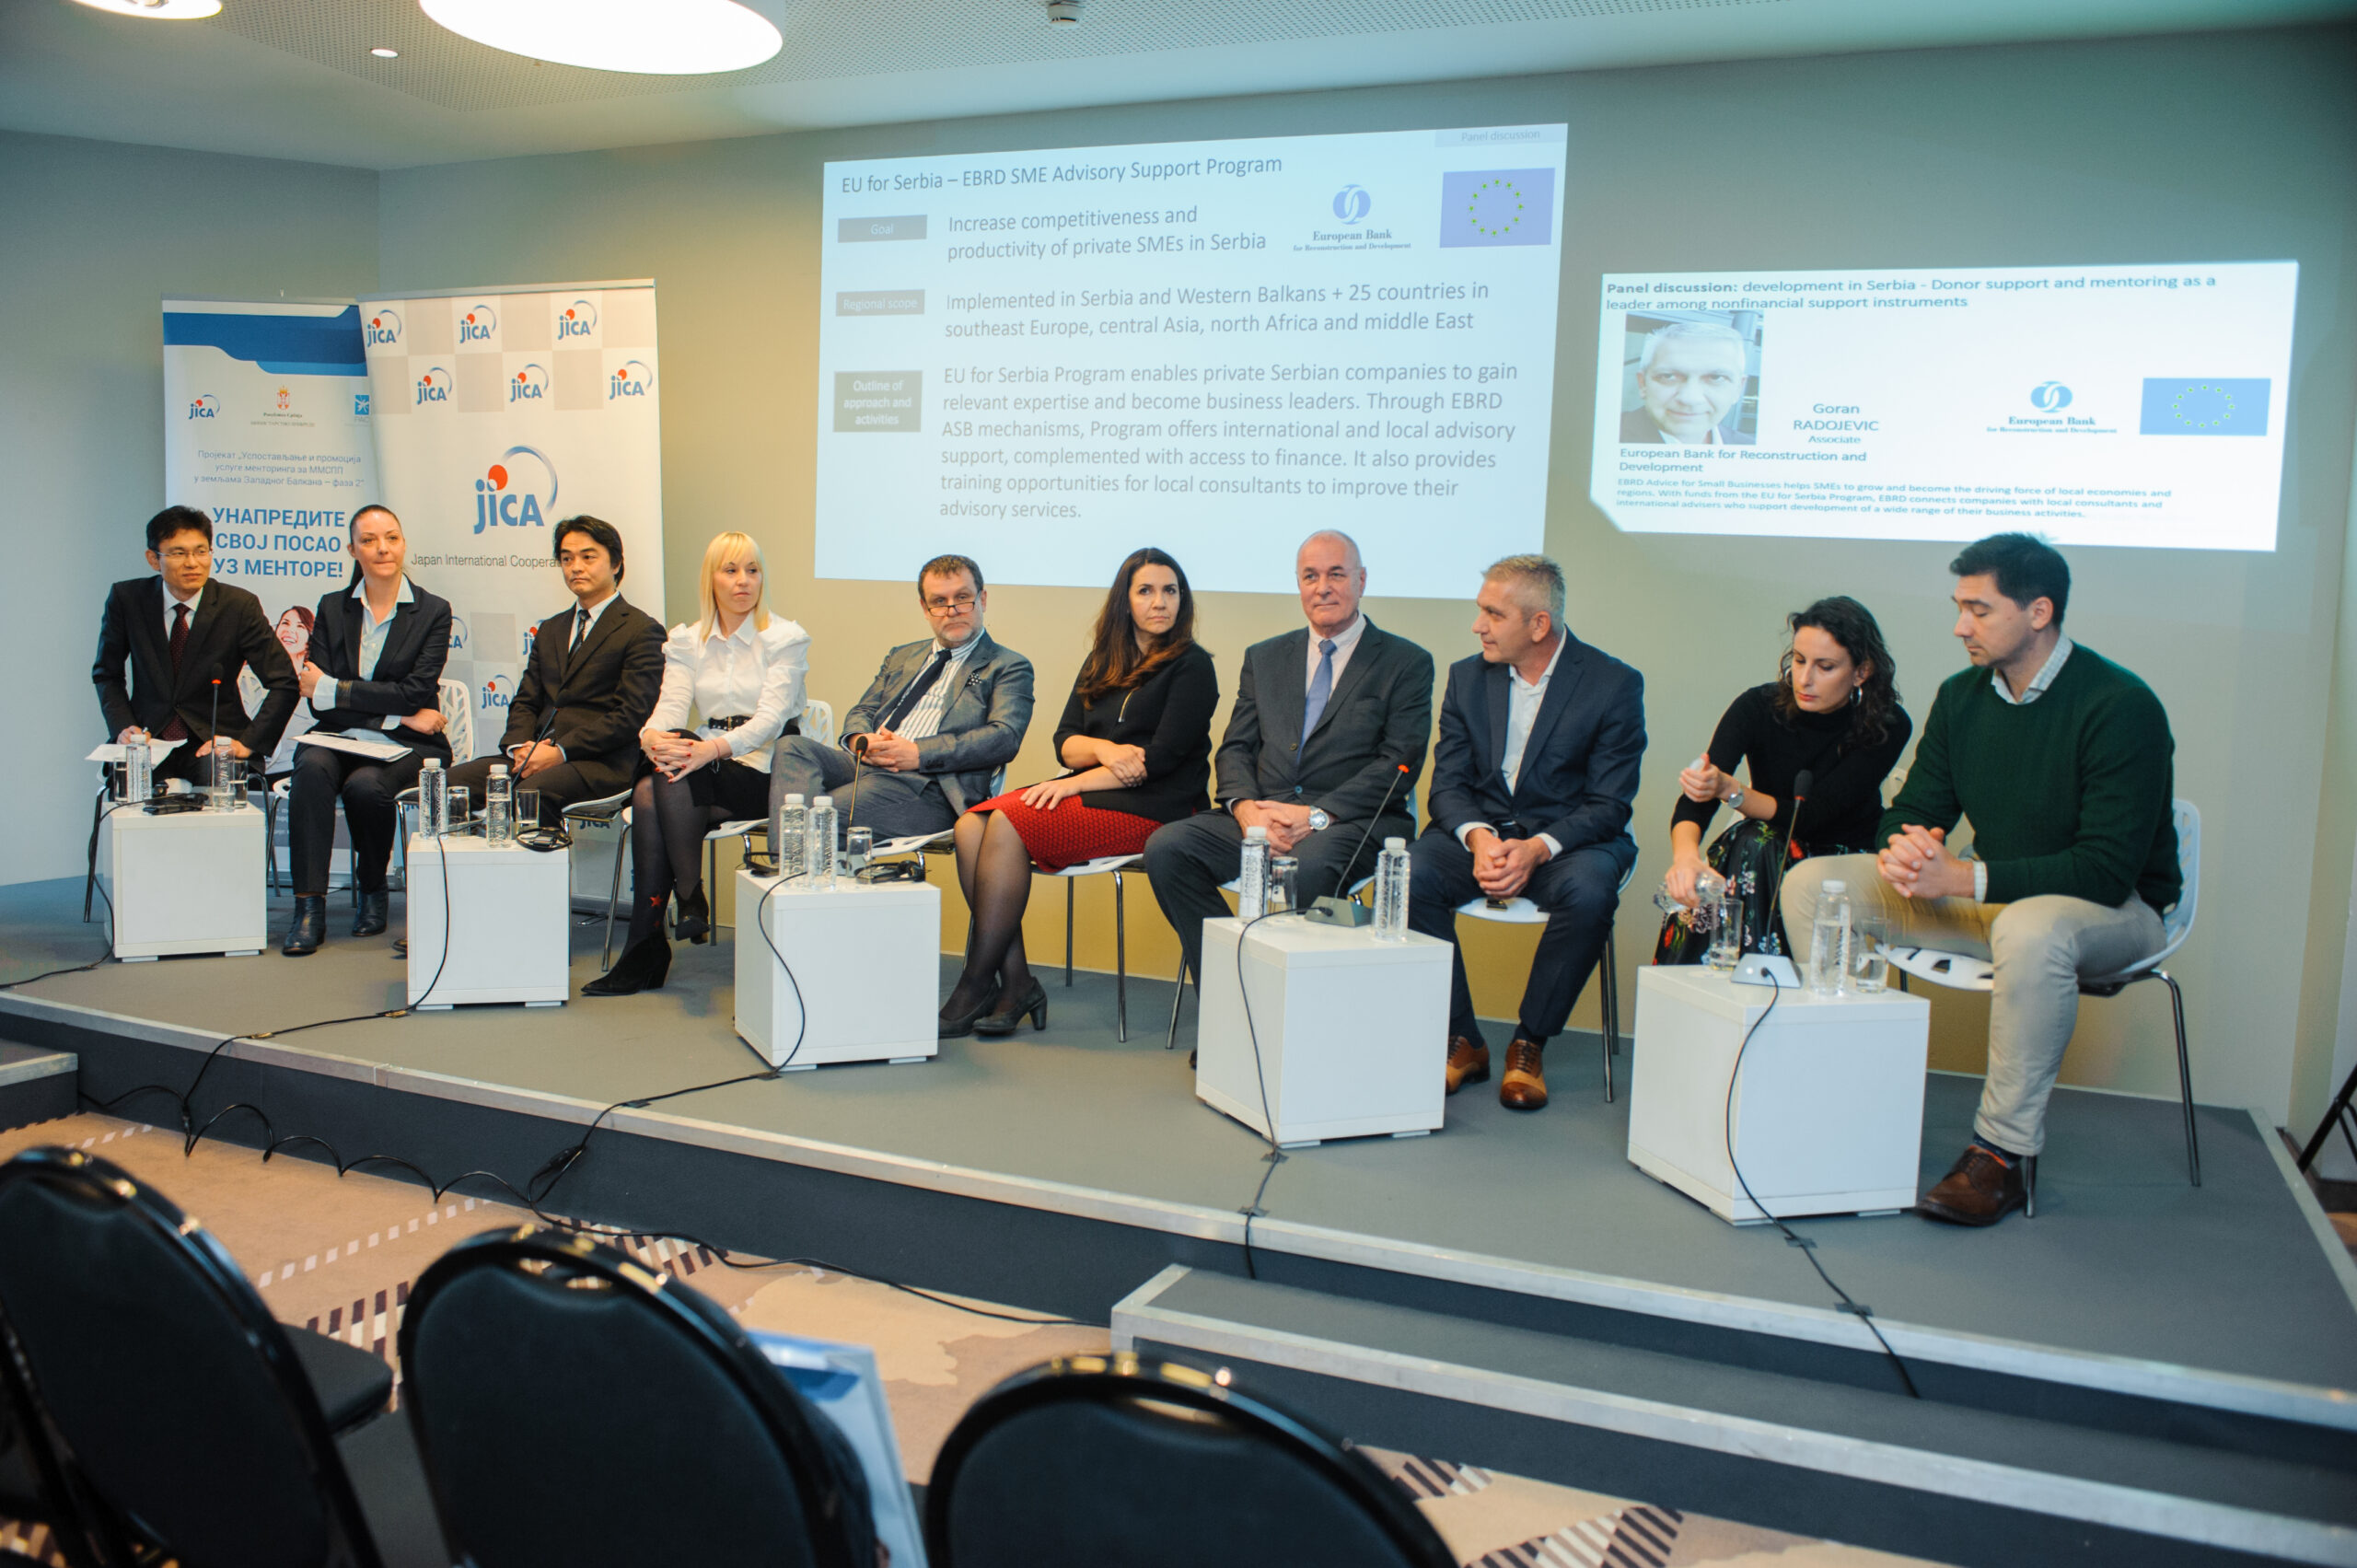 Dodeljena priznanja za razvoj mentoringa u Srbiji i na Balkanu